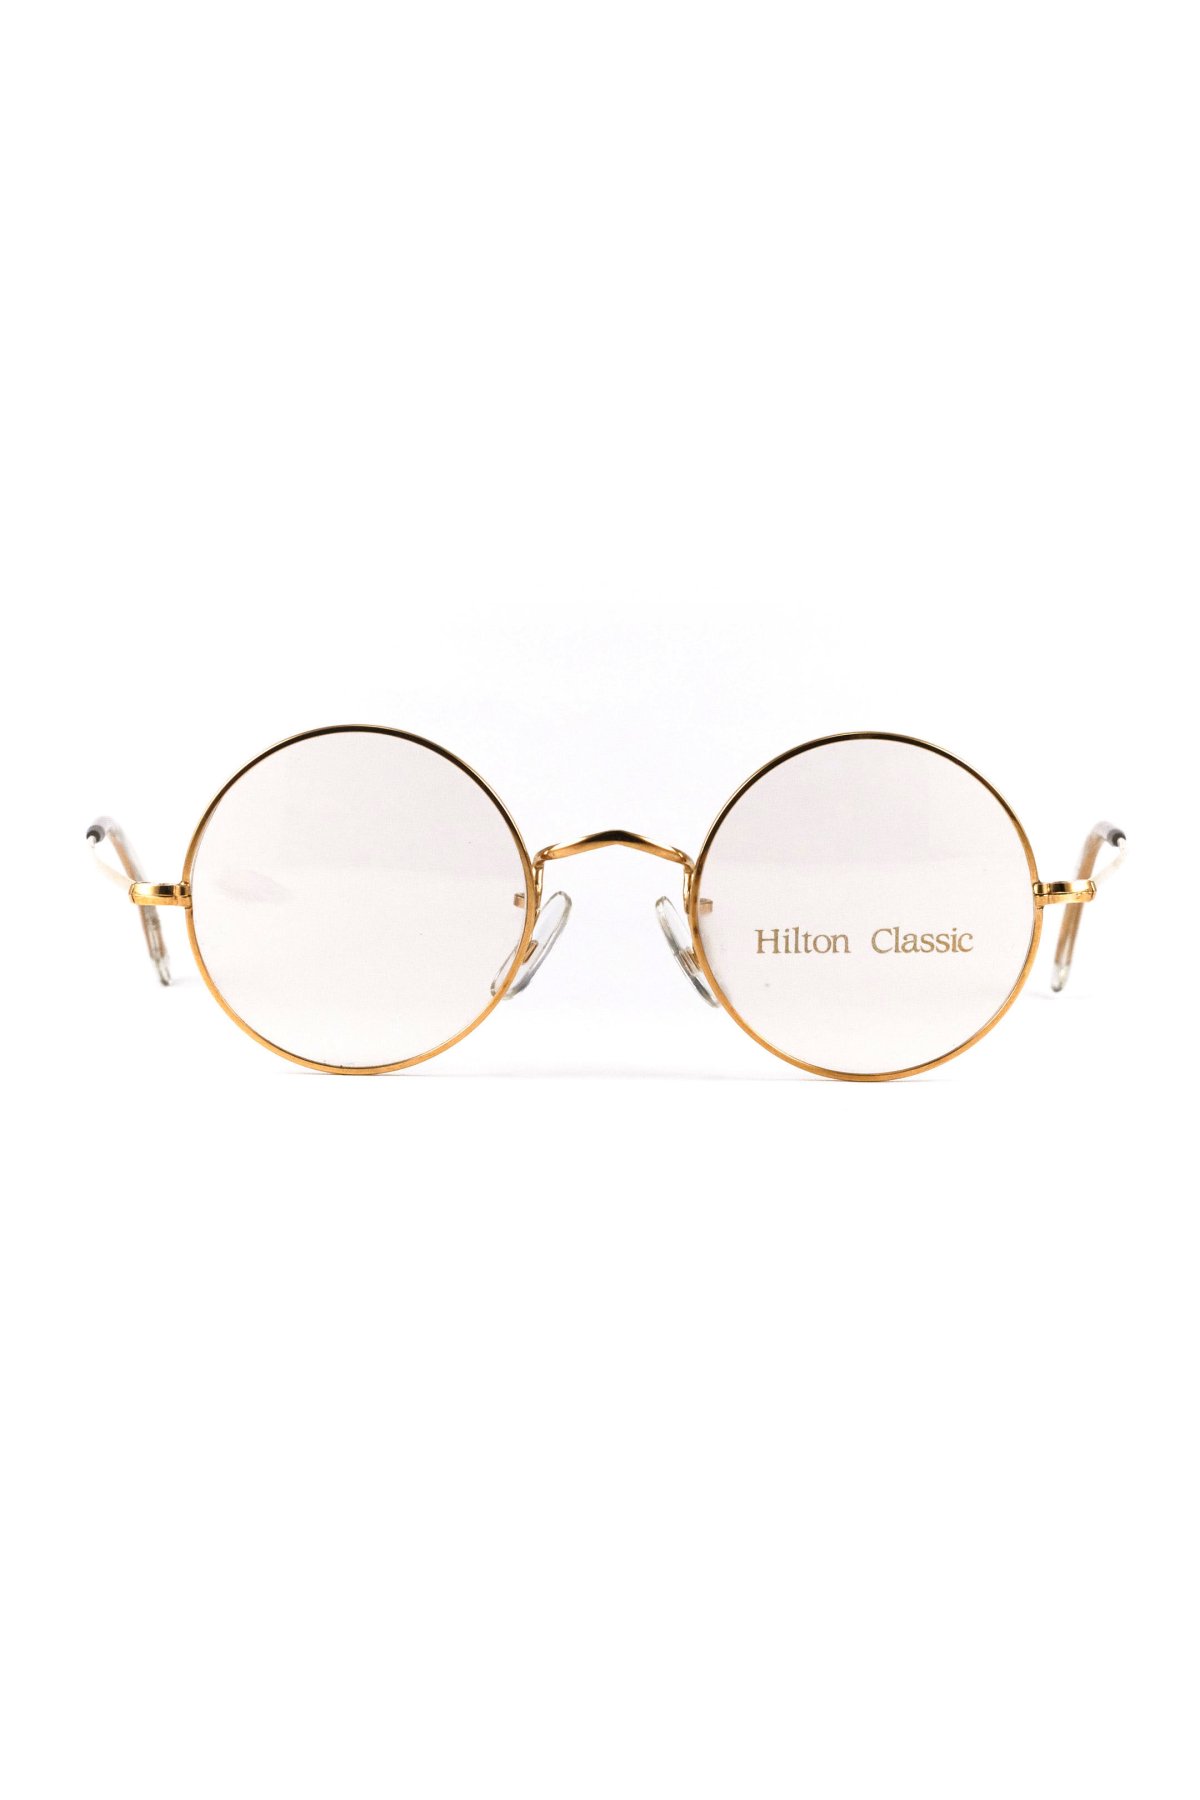 割引購入 70´s HILTON CLASSIC 眼鏡 14KTRG www.laessa.fr